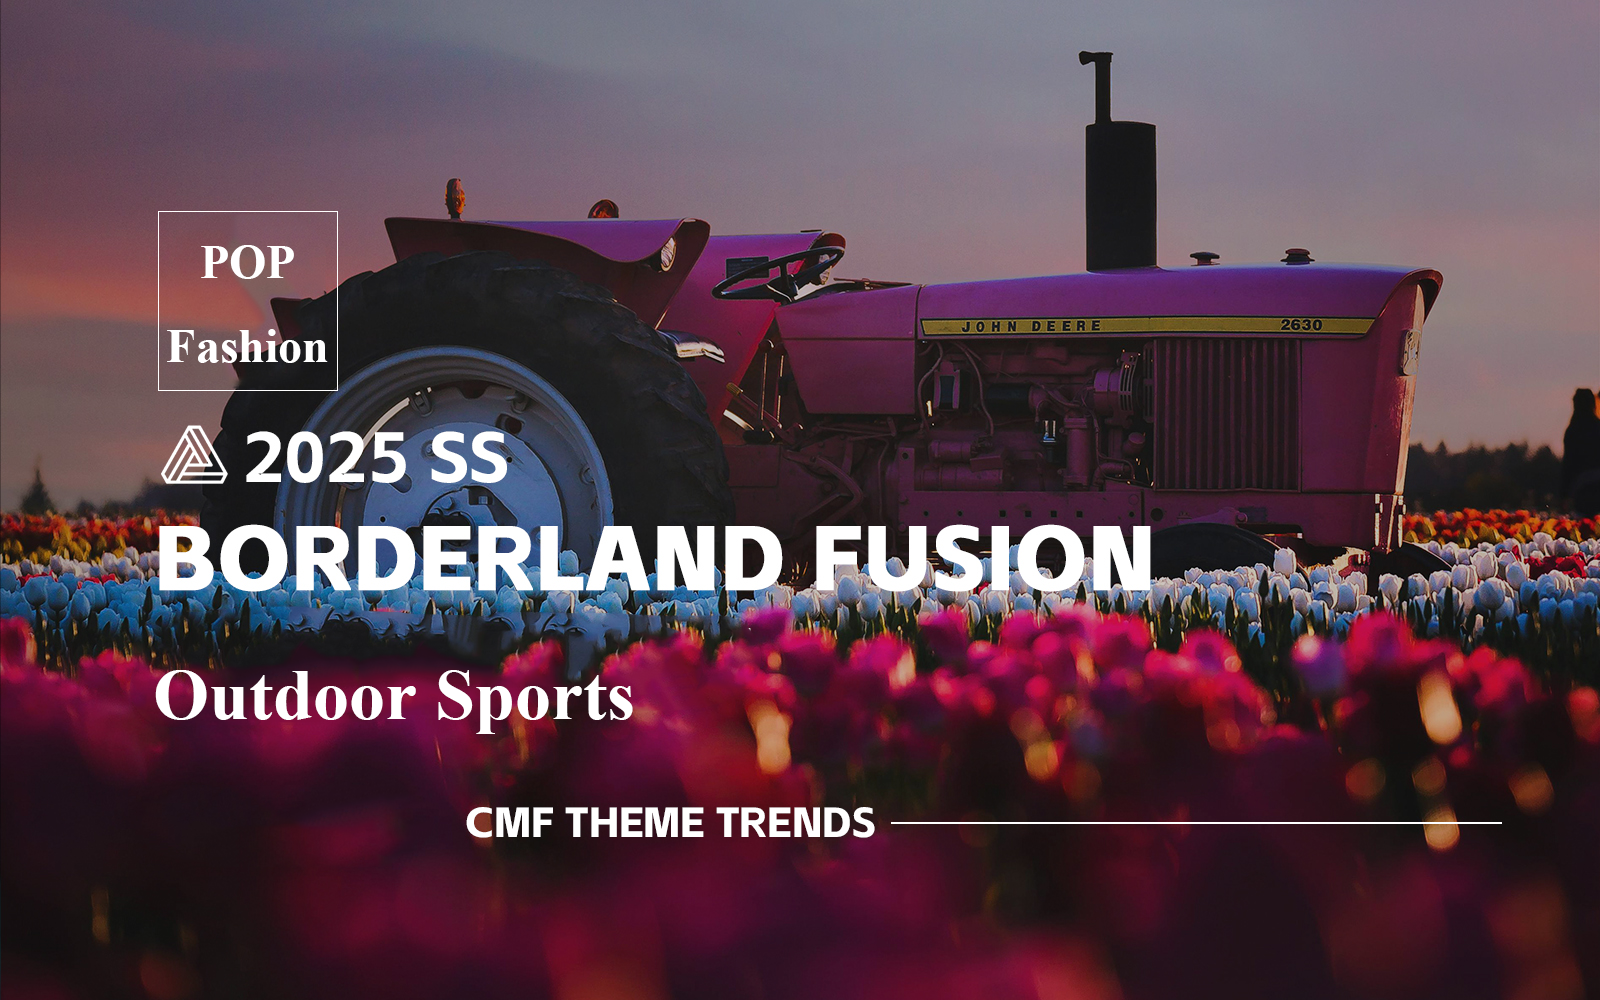 Borderland Fusion -- S/S 2025 Outdoor Sports